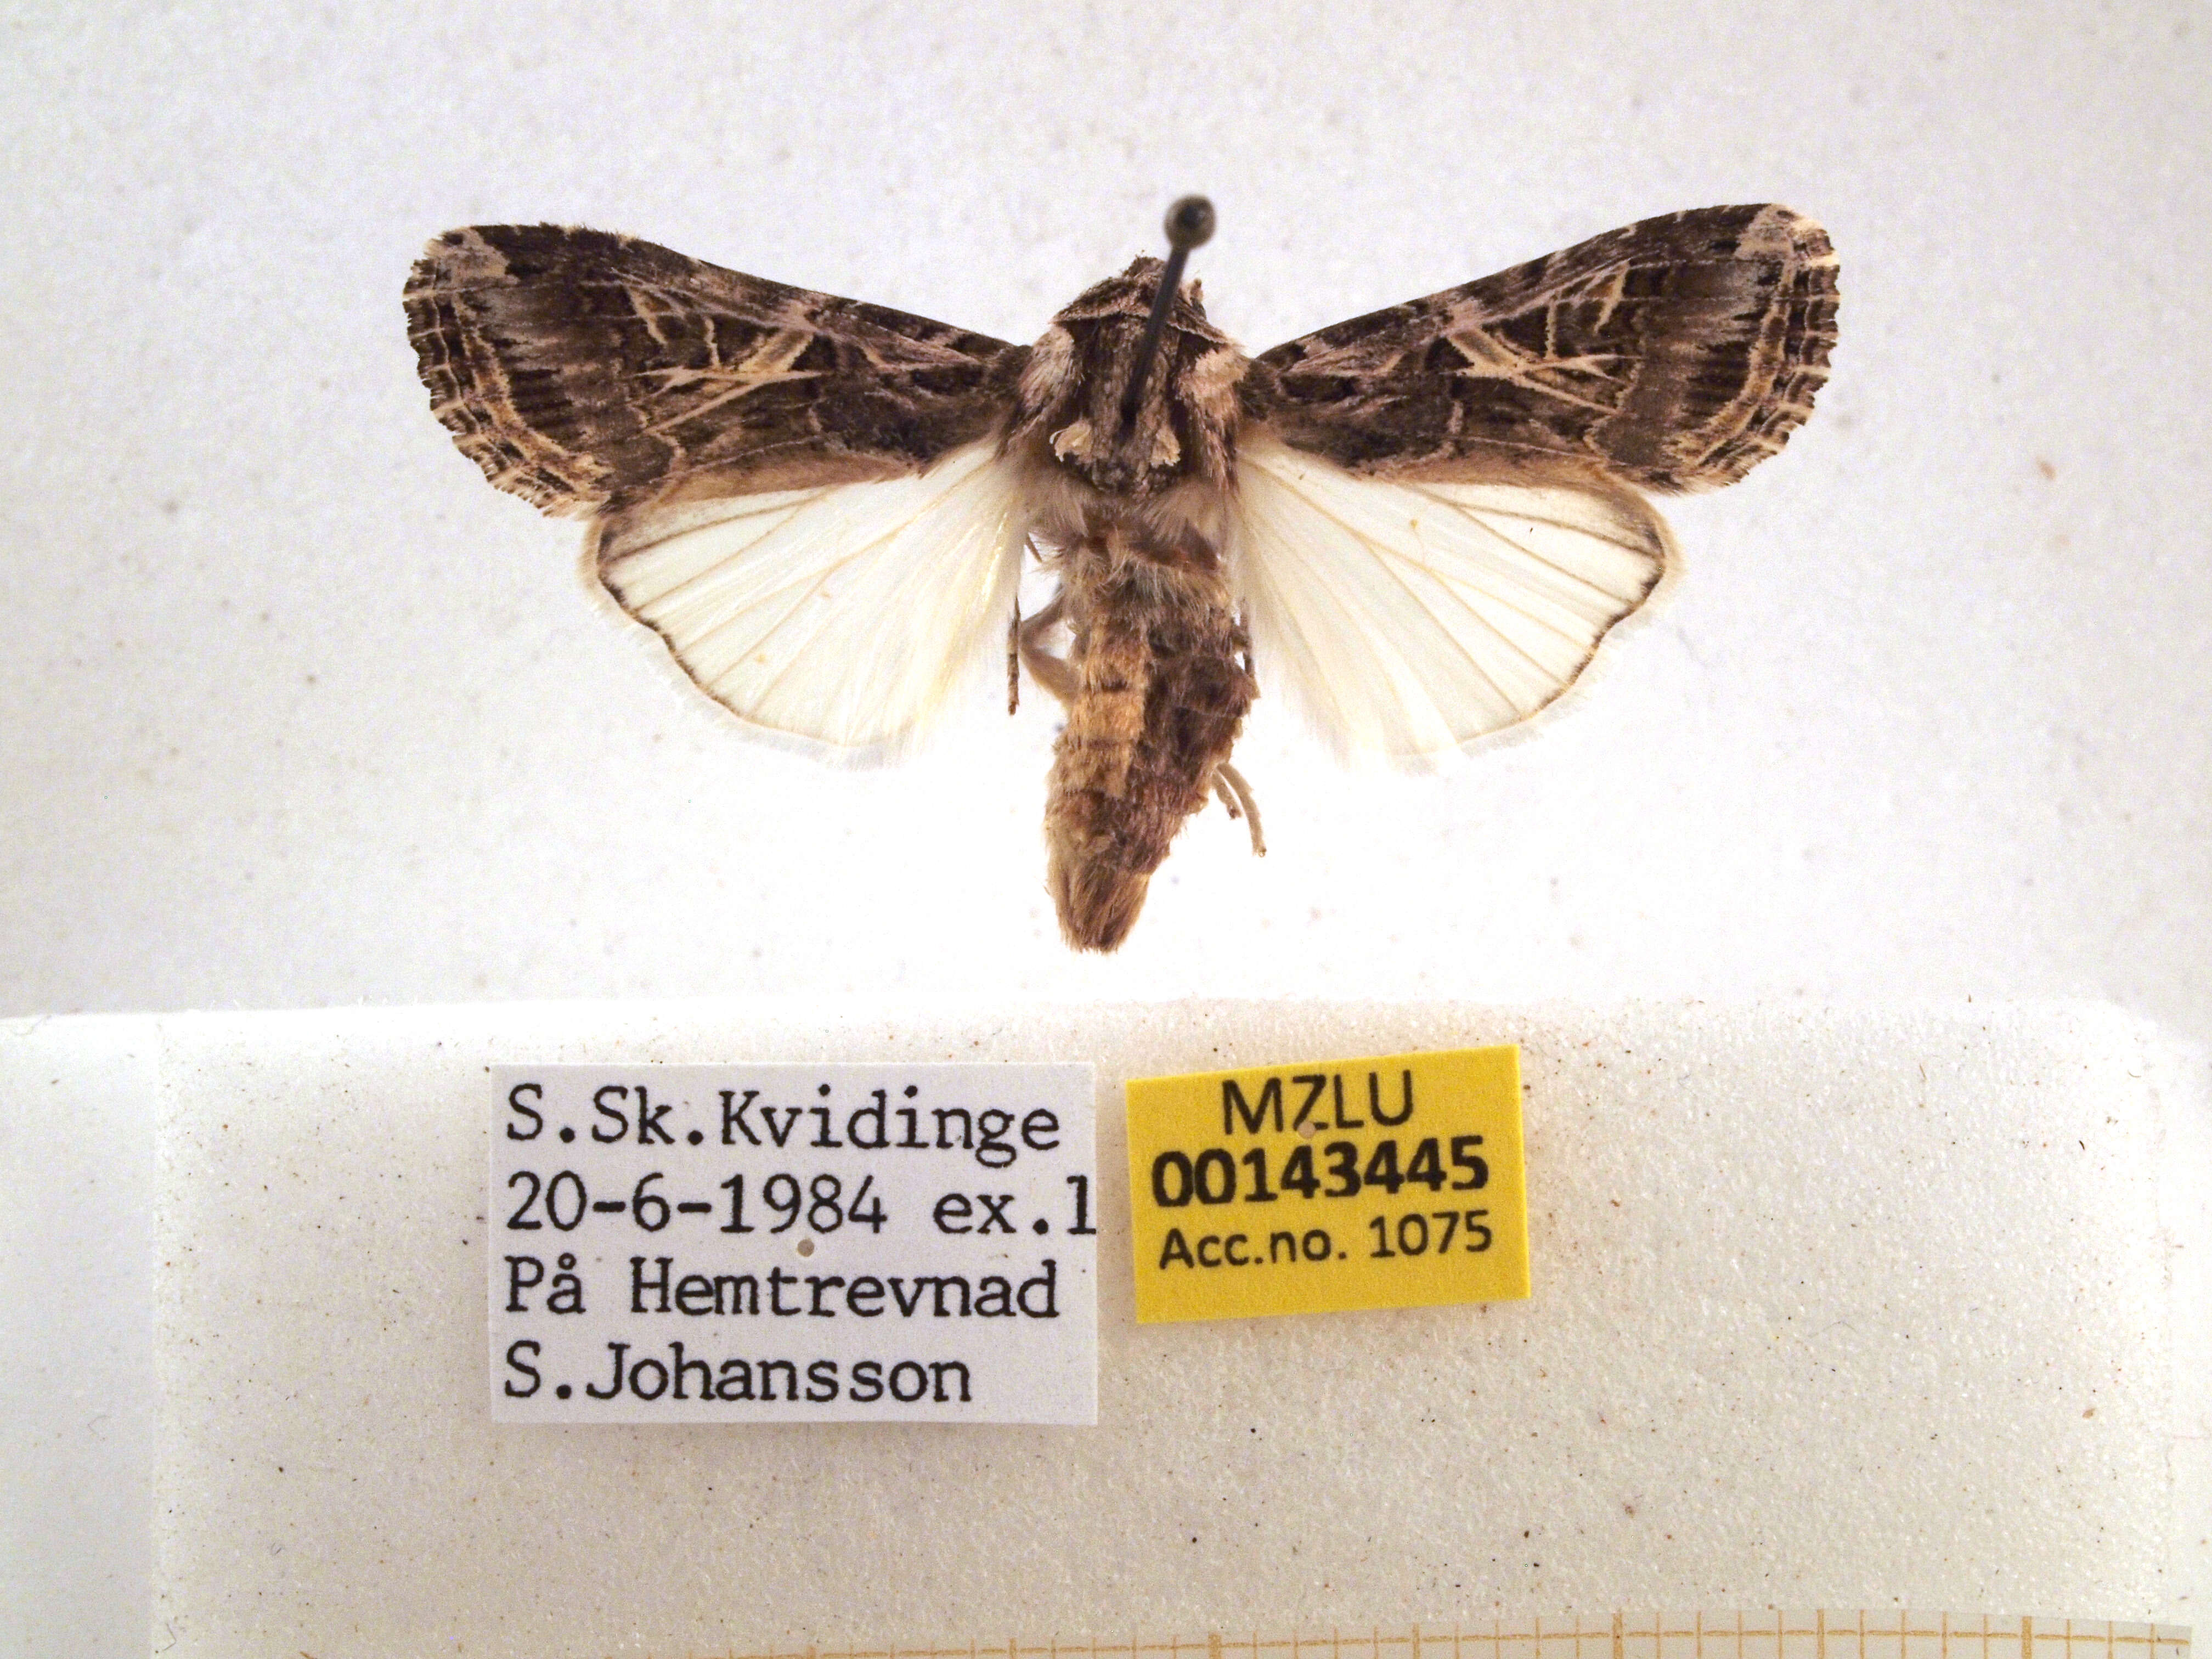 Image of Spodoptera littoralis Boisduval 1833